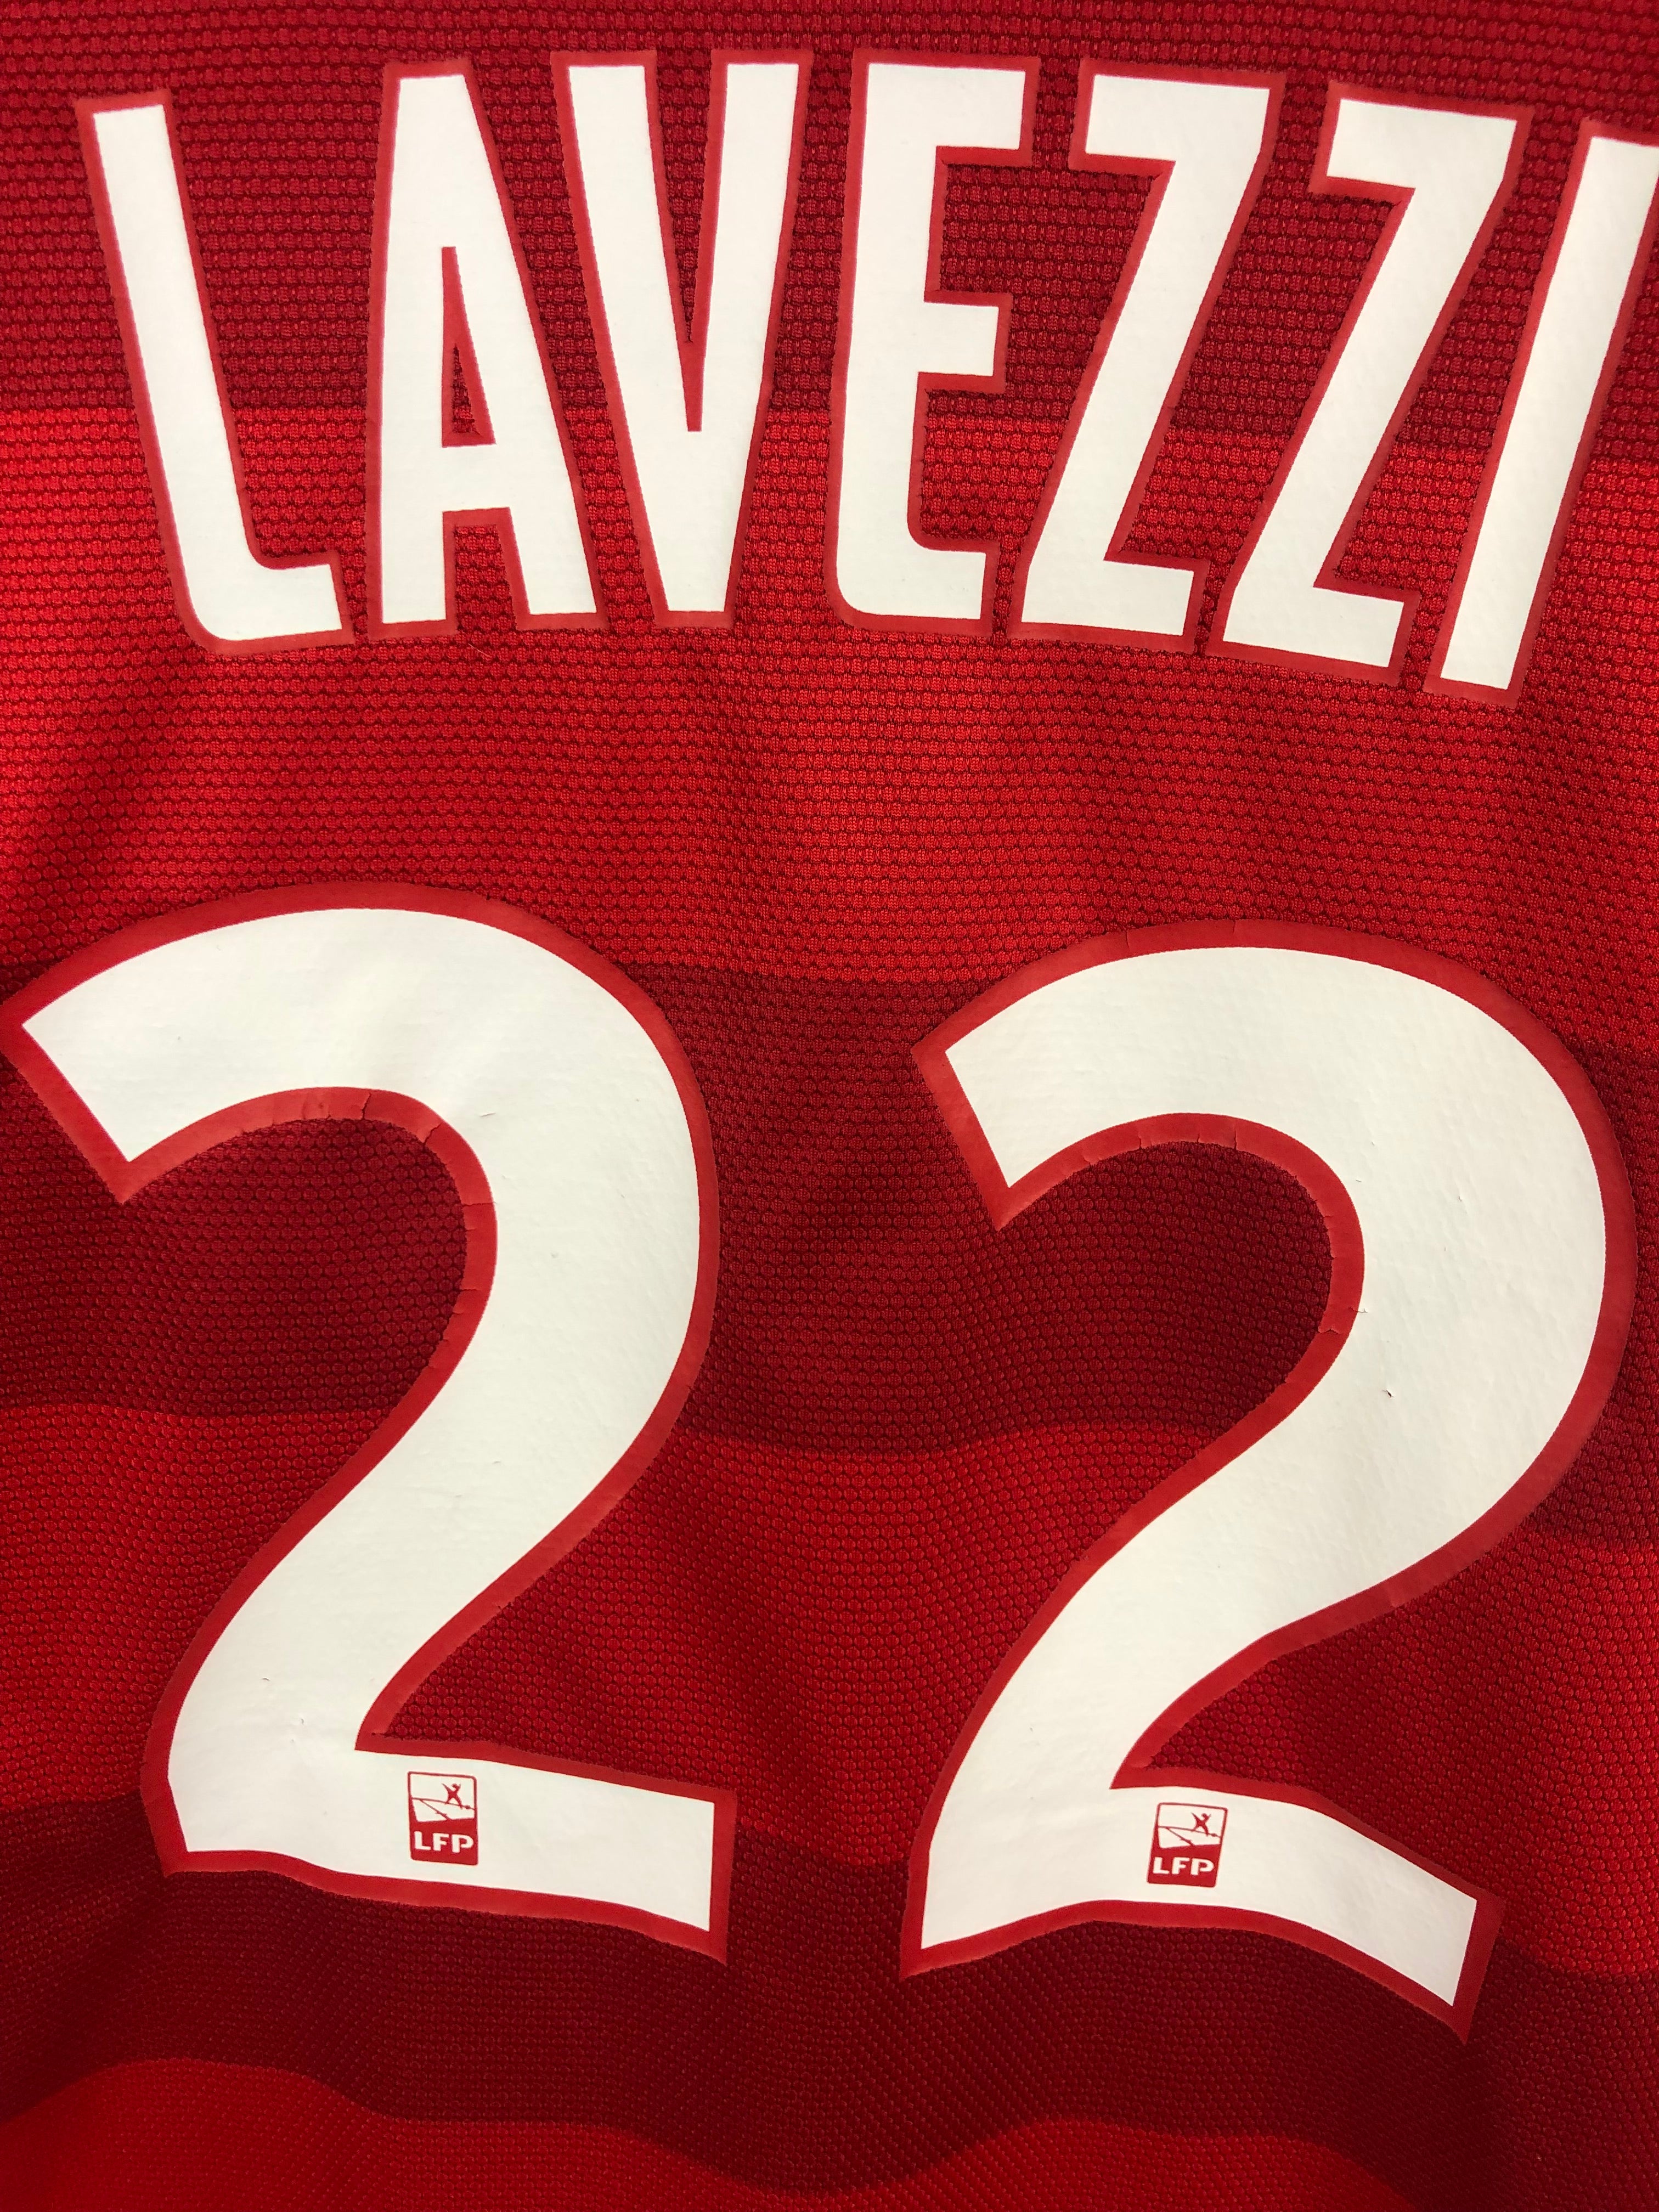 Lavezzi PSG 12/13 away jersey - M